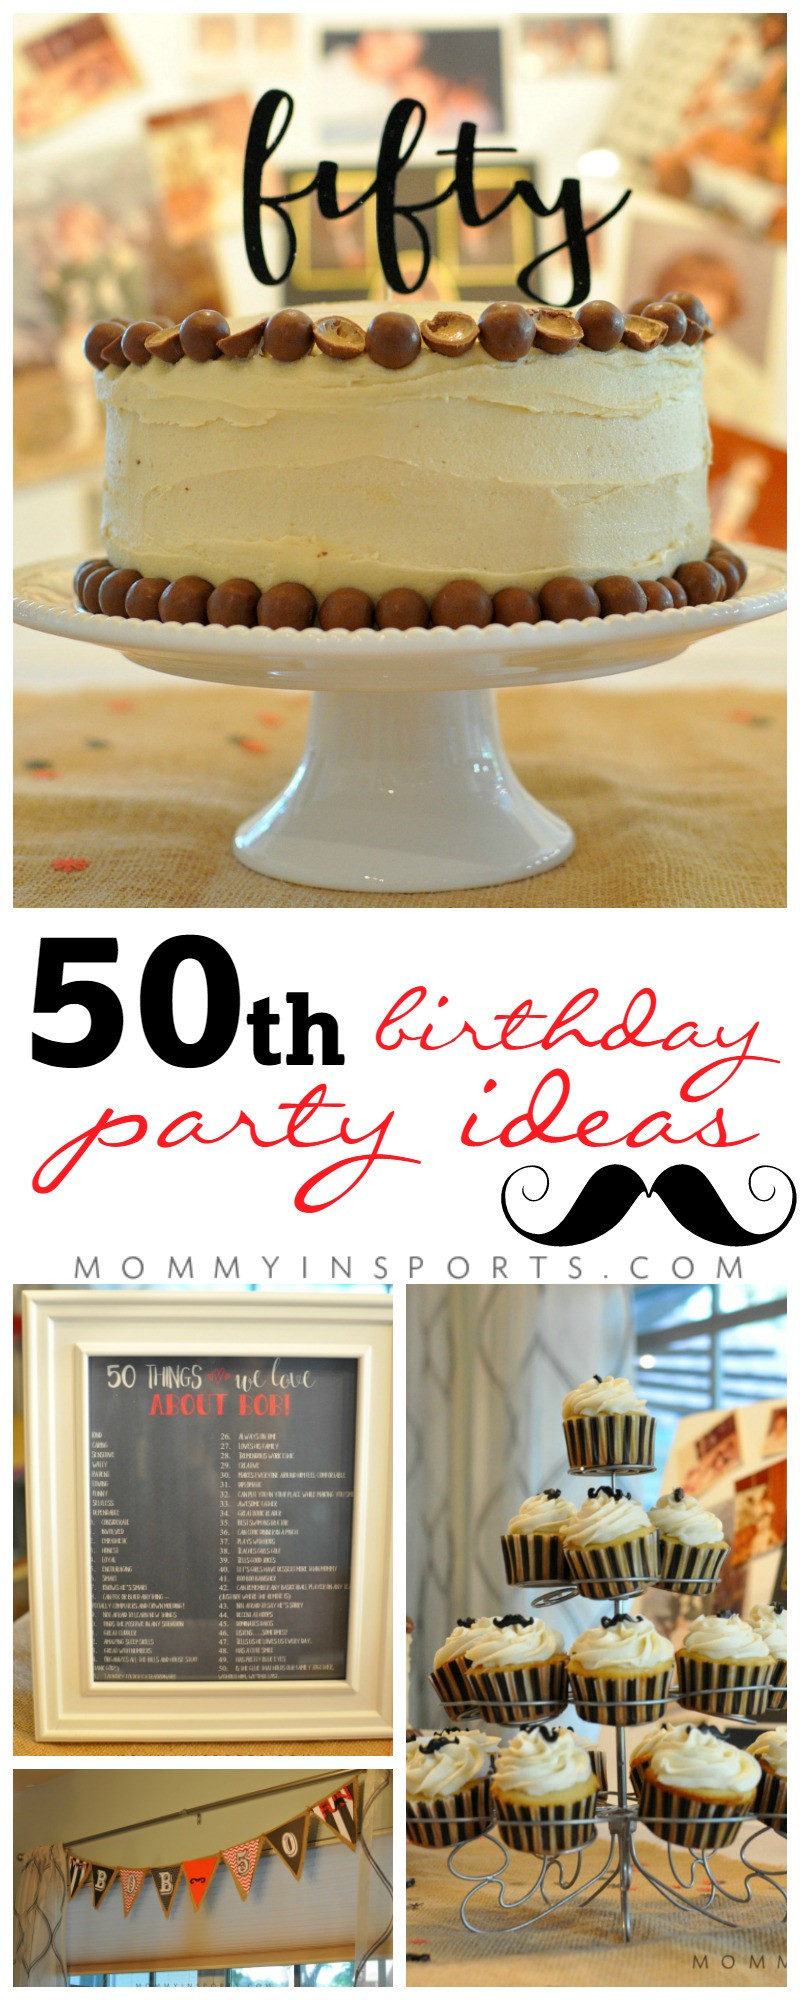 Happy 50th Birthday Decorations
 50th Birthday Party Ideas Kristen Hewitt